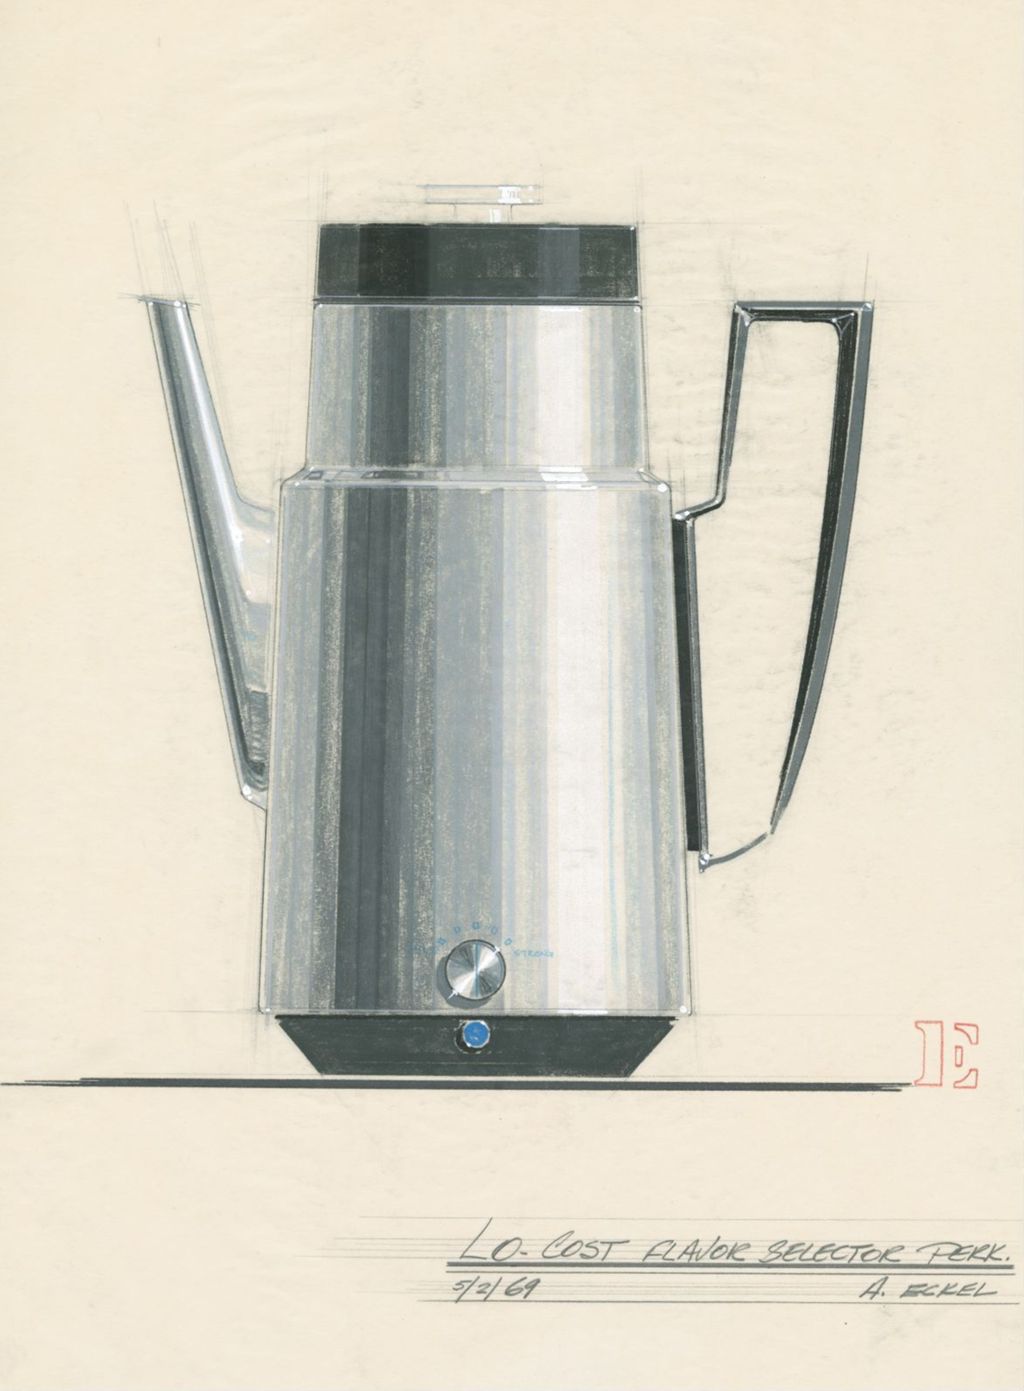 Miniature of Coffee percolator